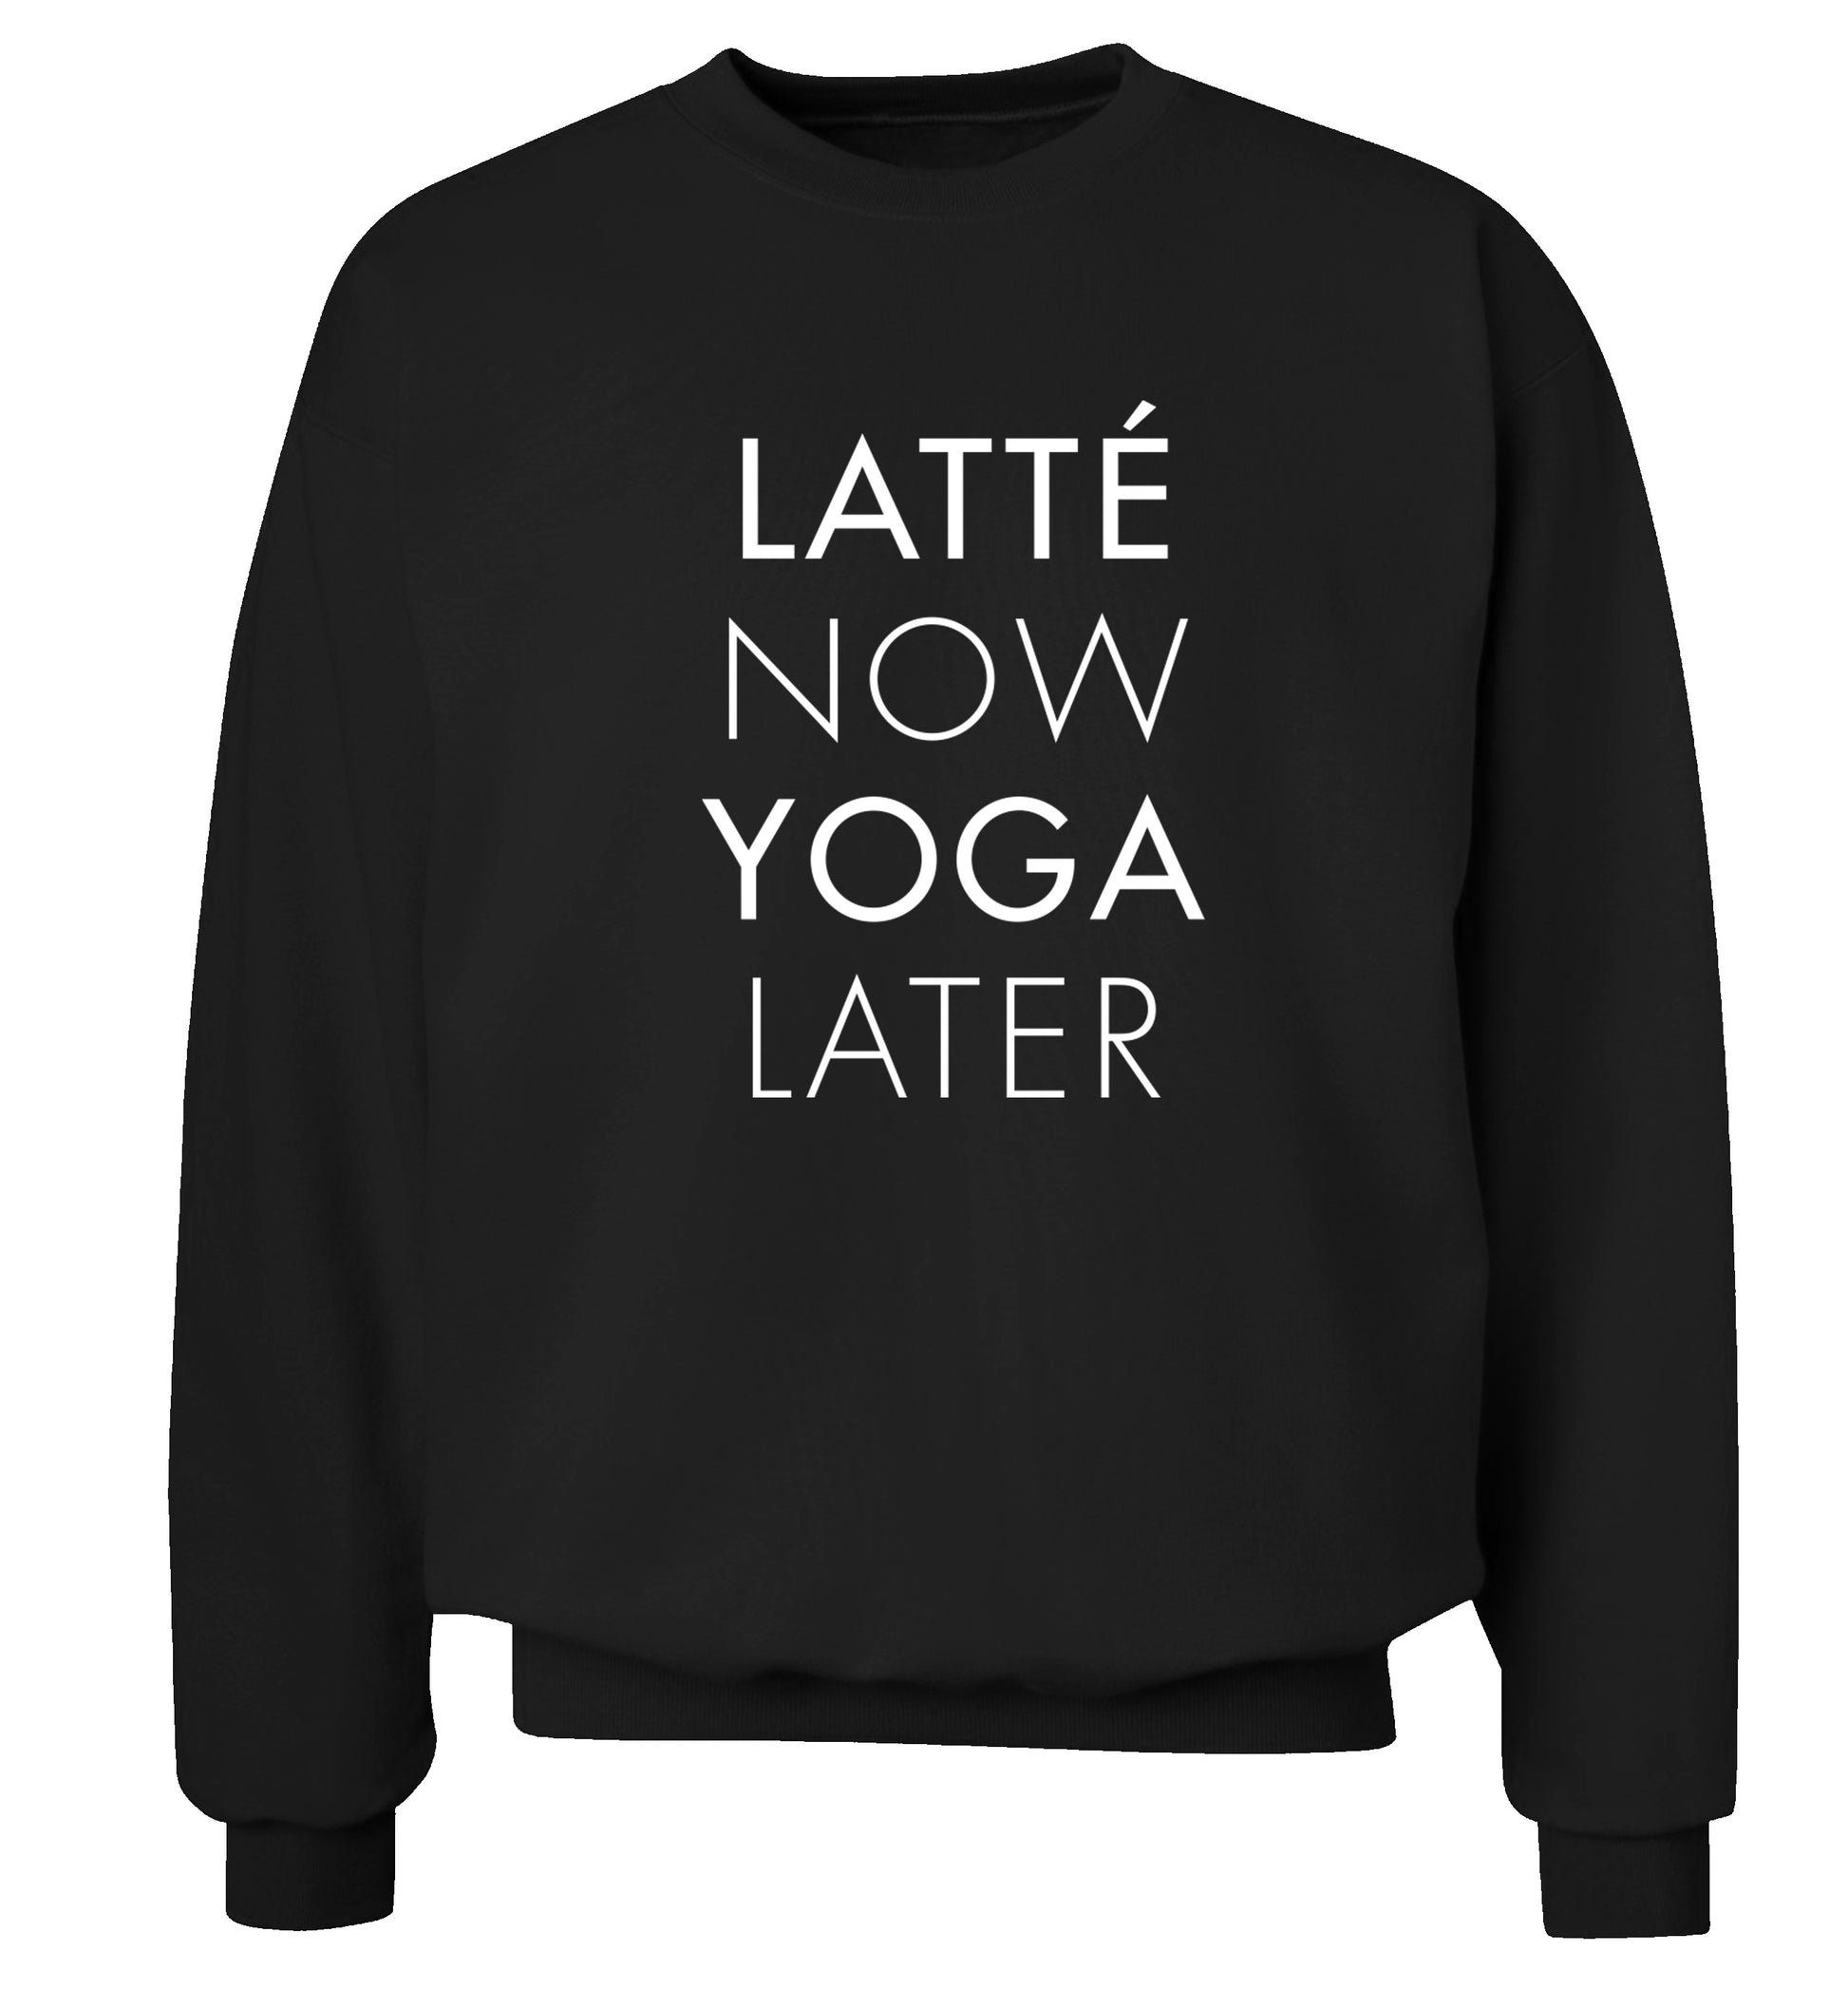 Latte now yoga later Adult's unisex black Sweater 2XL